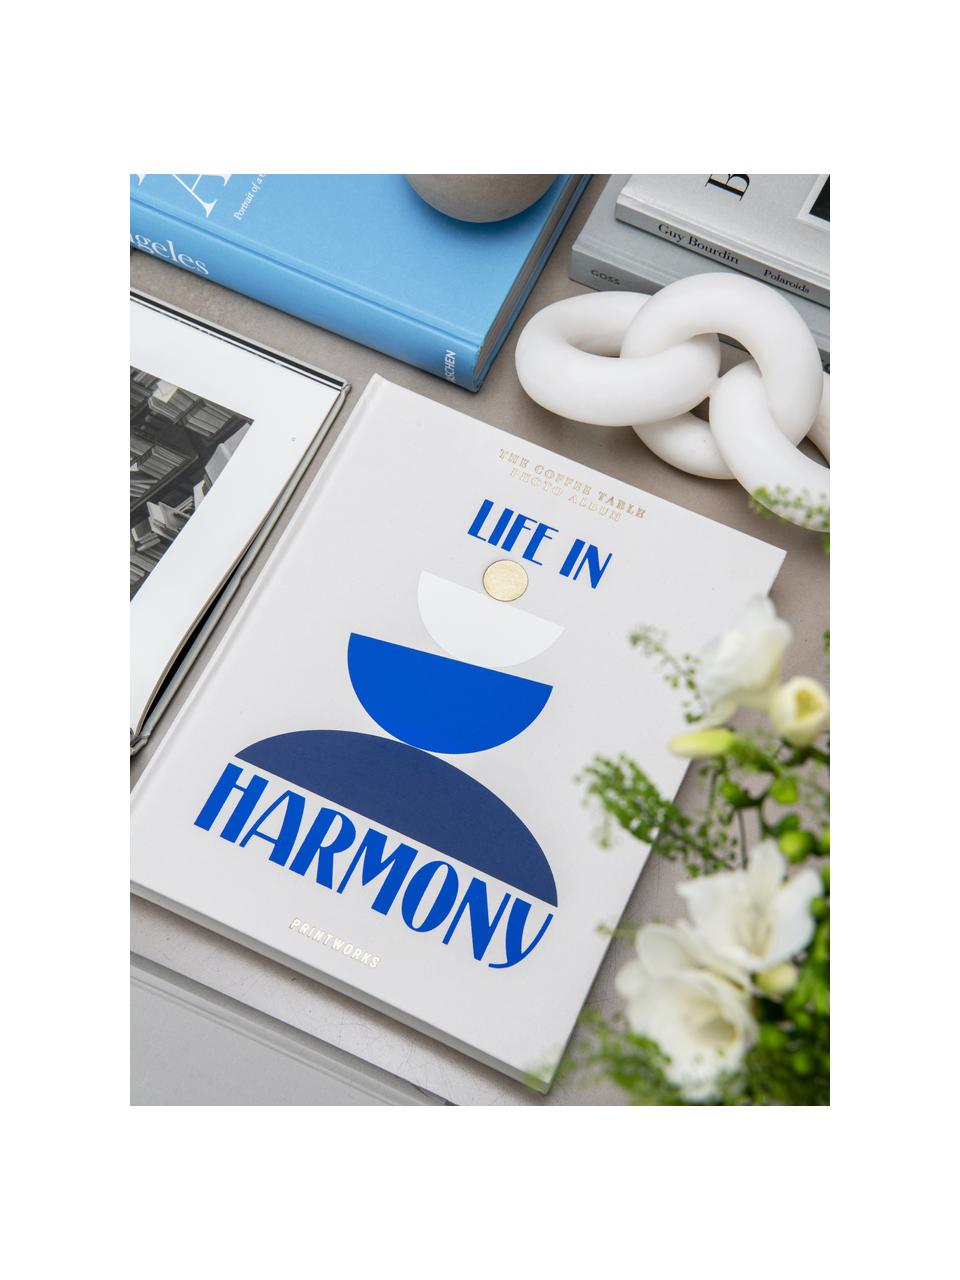 Album fotografico Life In Harmony, Tonalità blu, grigio chiaro, Larg. 33 x Alt. 27 cm